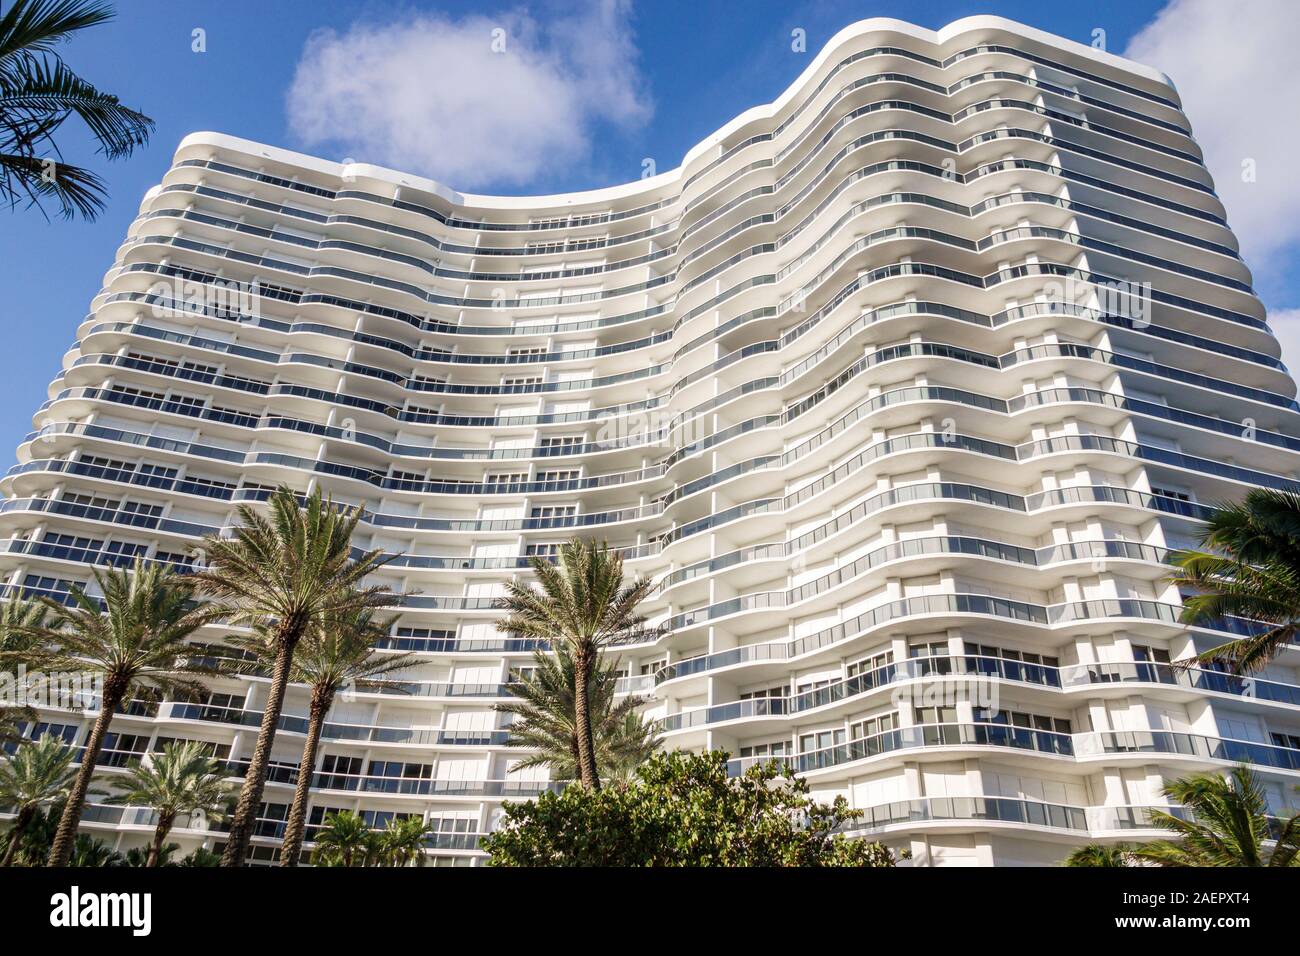 Miami Florida,Bal Harbour,Collins Avenue,Majestic Towers,condominium,high-rise,residential real estate,building exterior,hurricane shutters,balconies, Stock Photo